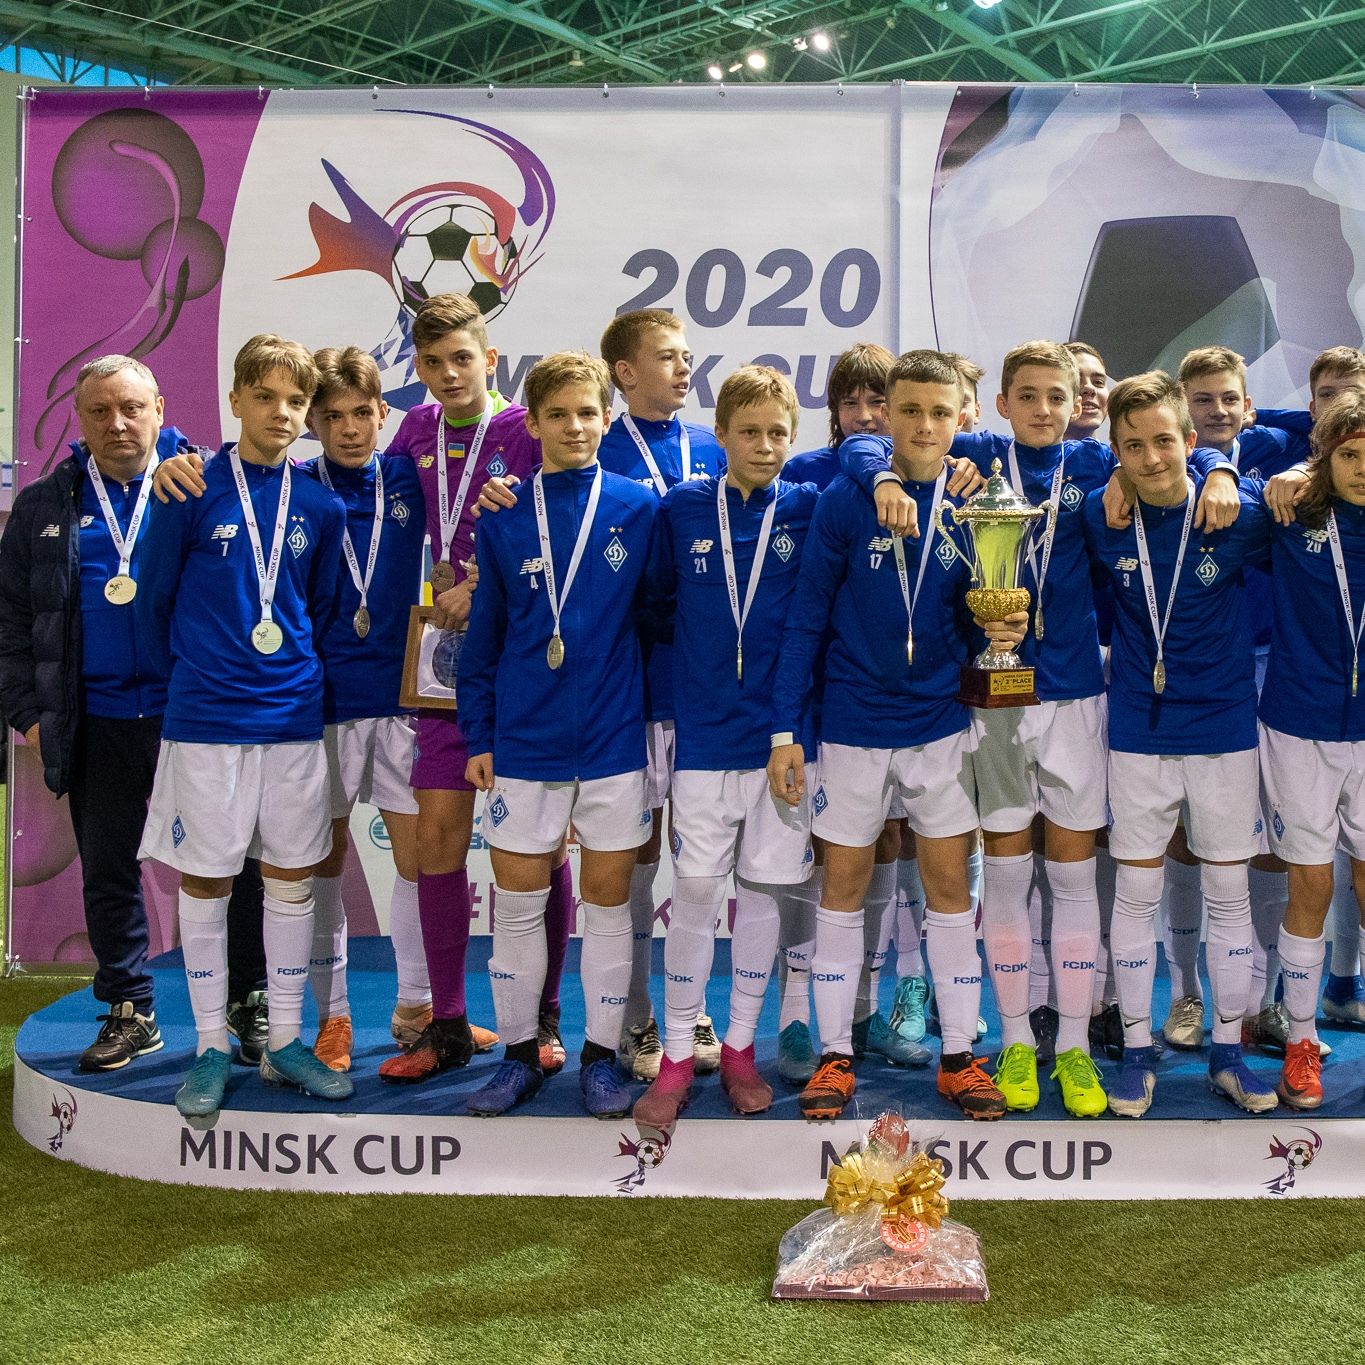 Dynamo U-14 – Minsk Cup 2020 runners-up (VIDEO)